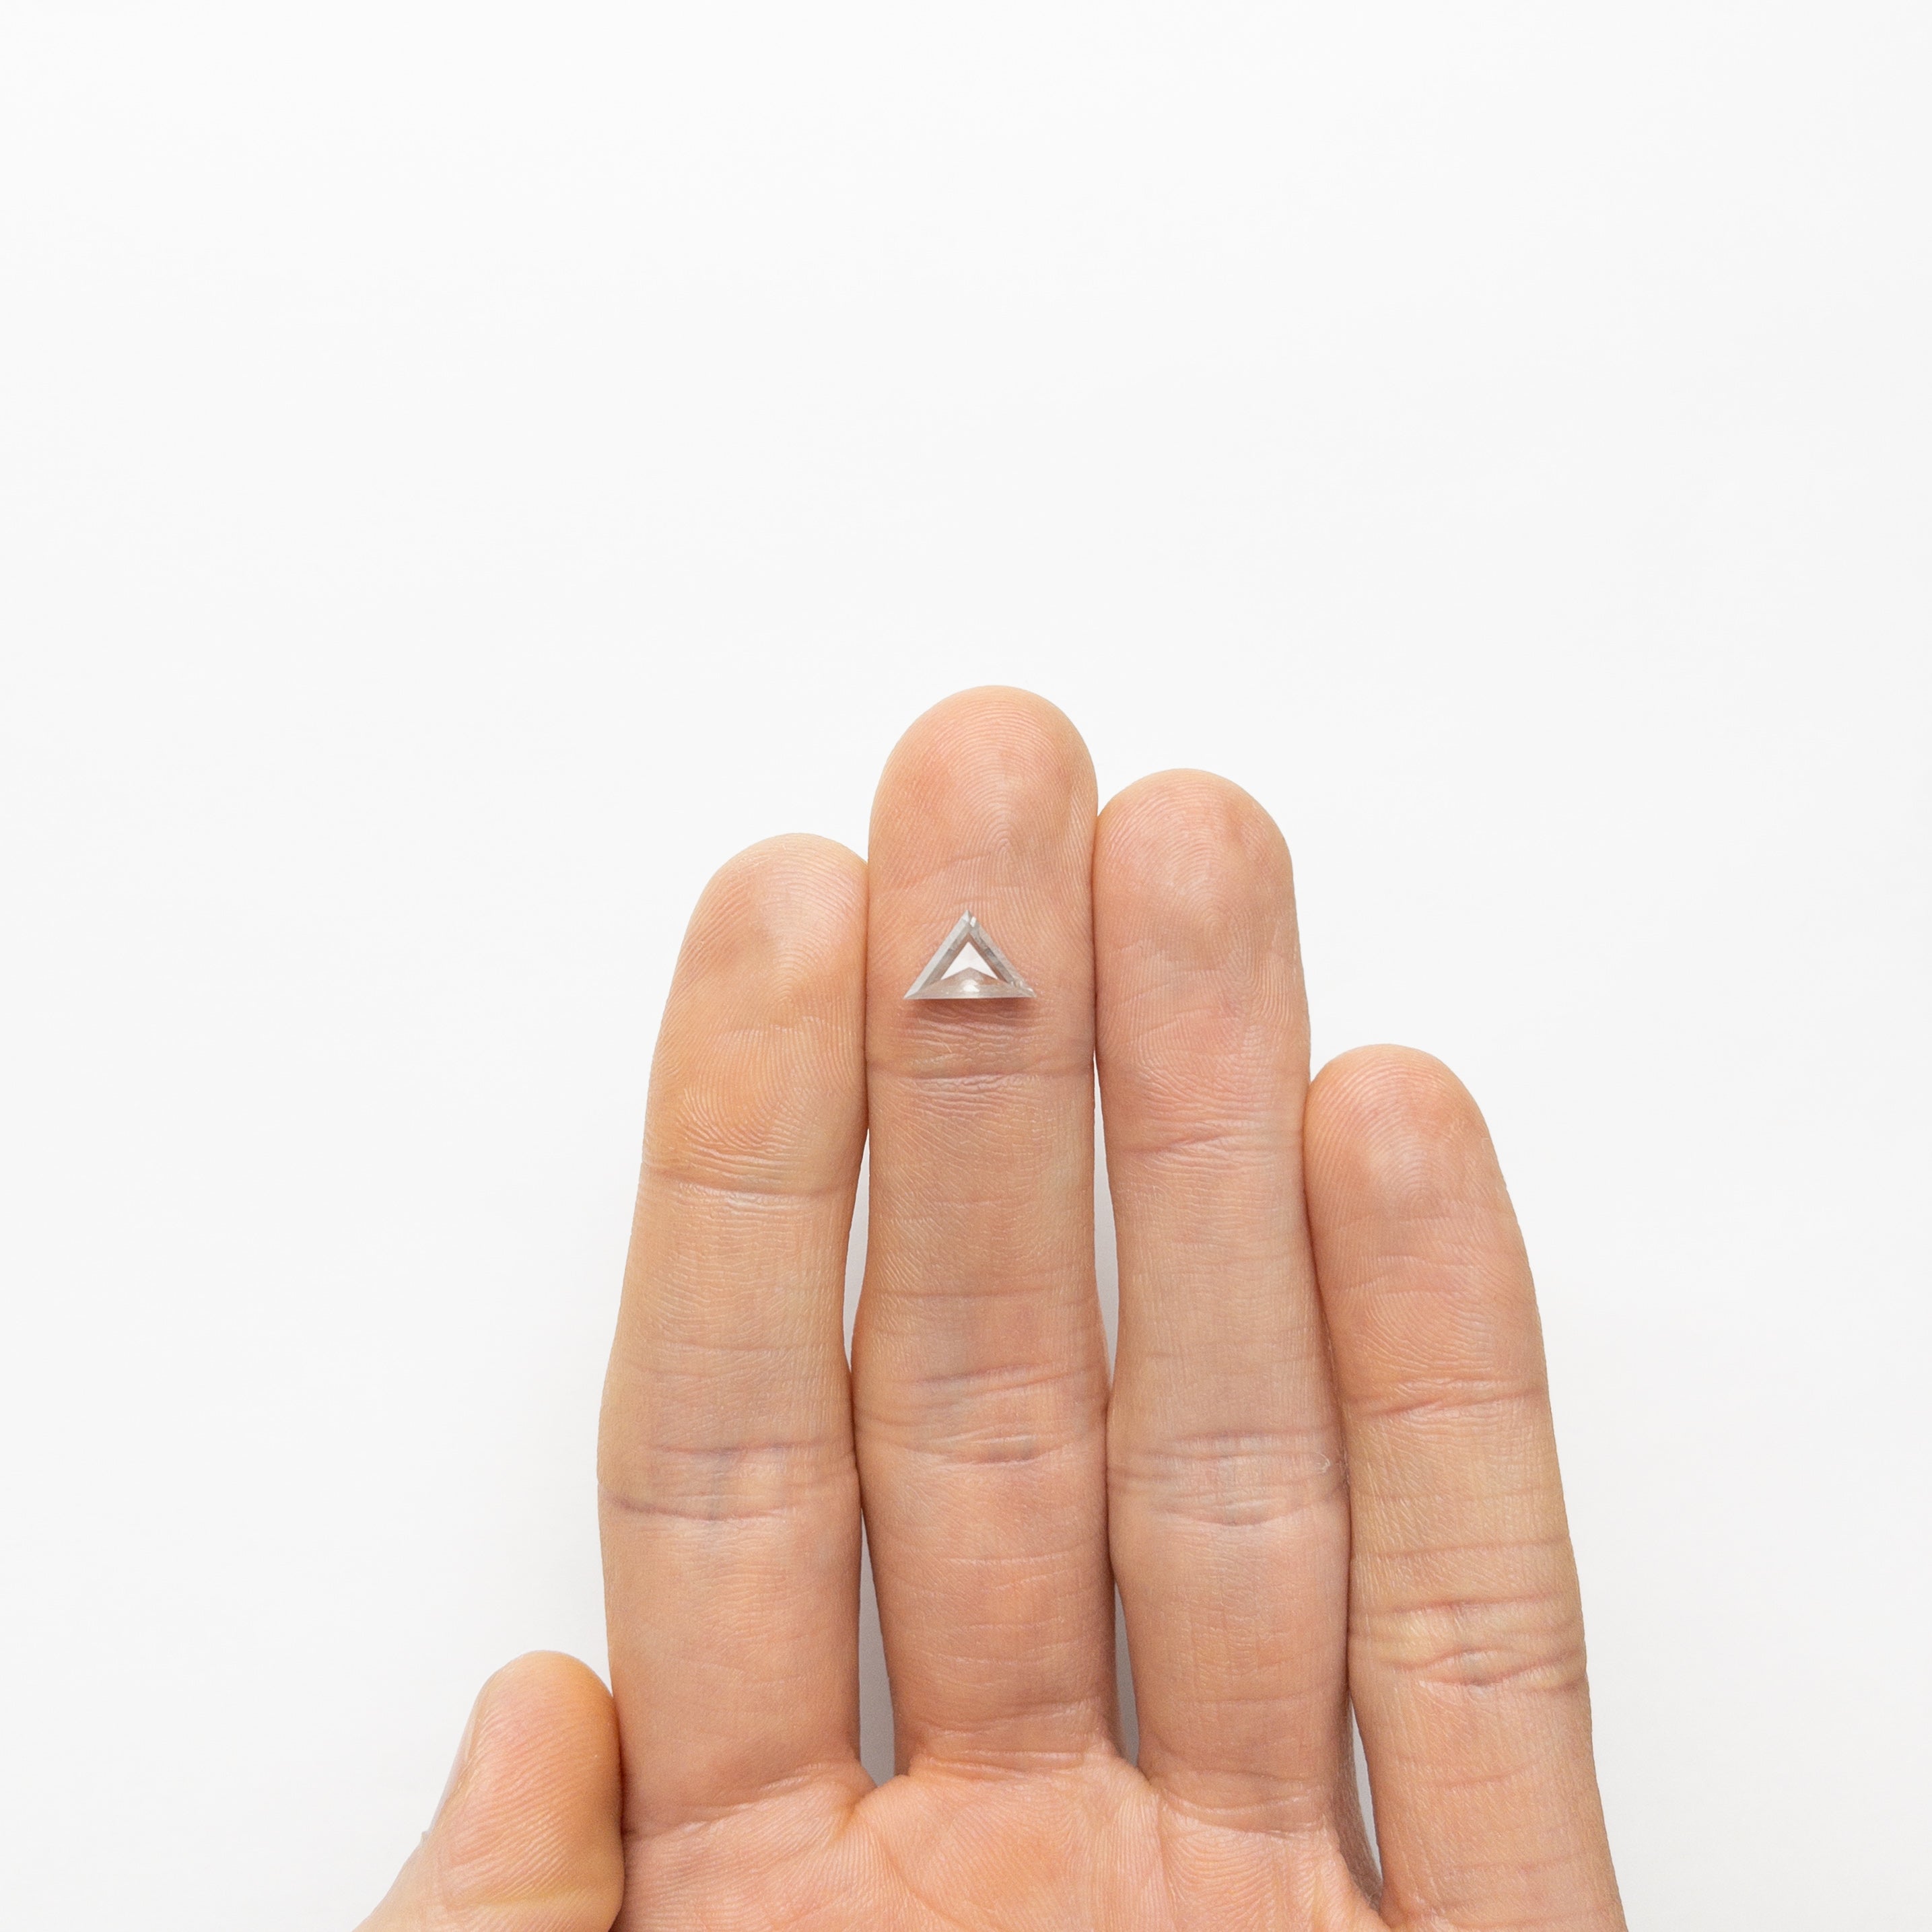 Fine line diamond tattoo on the finger